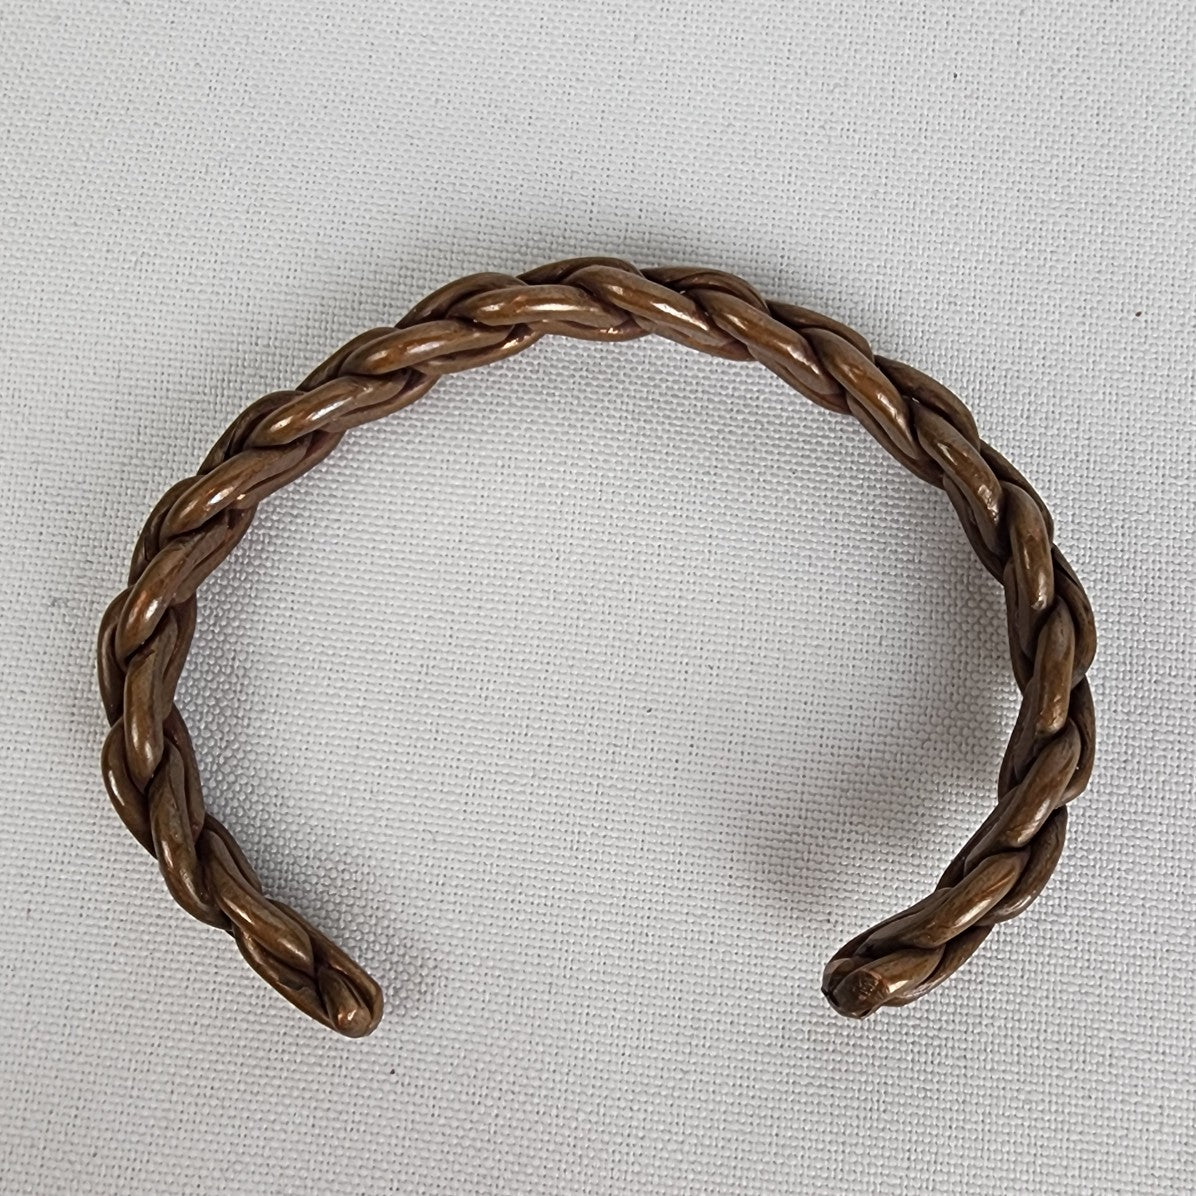 Vintage Braided Copper Cuff Bracelet